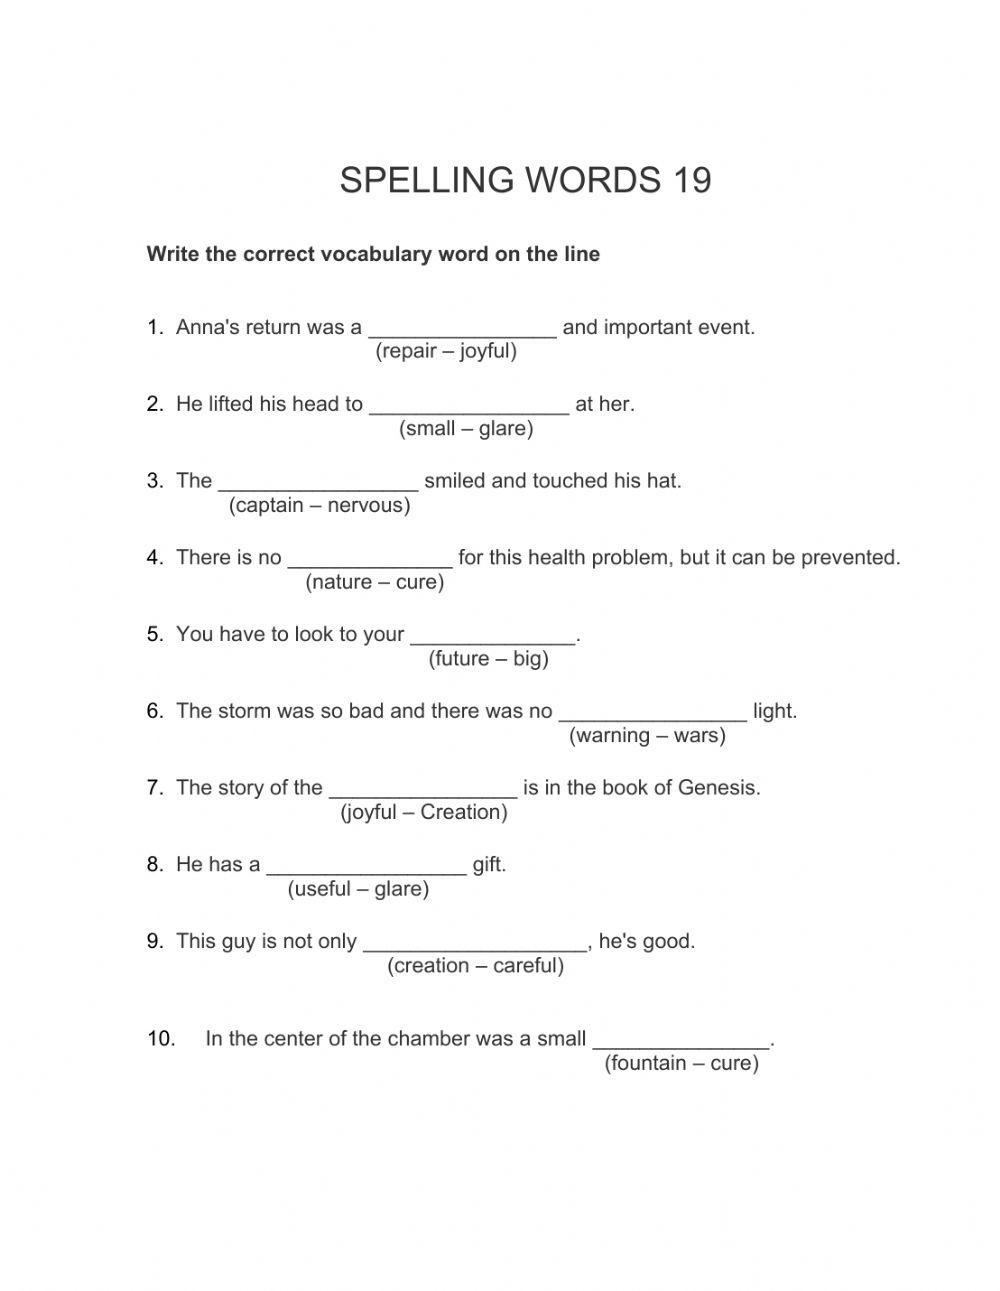 Spelling List -19